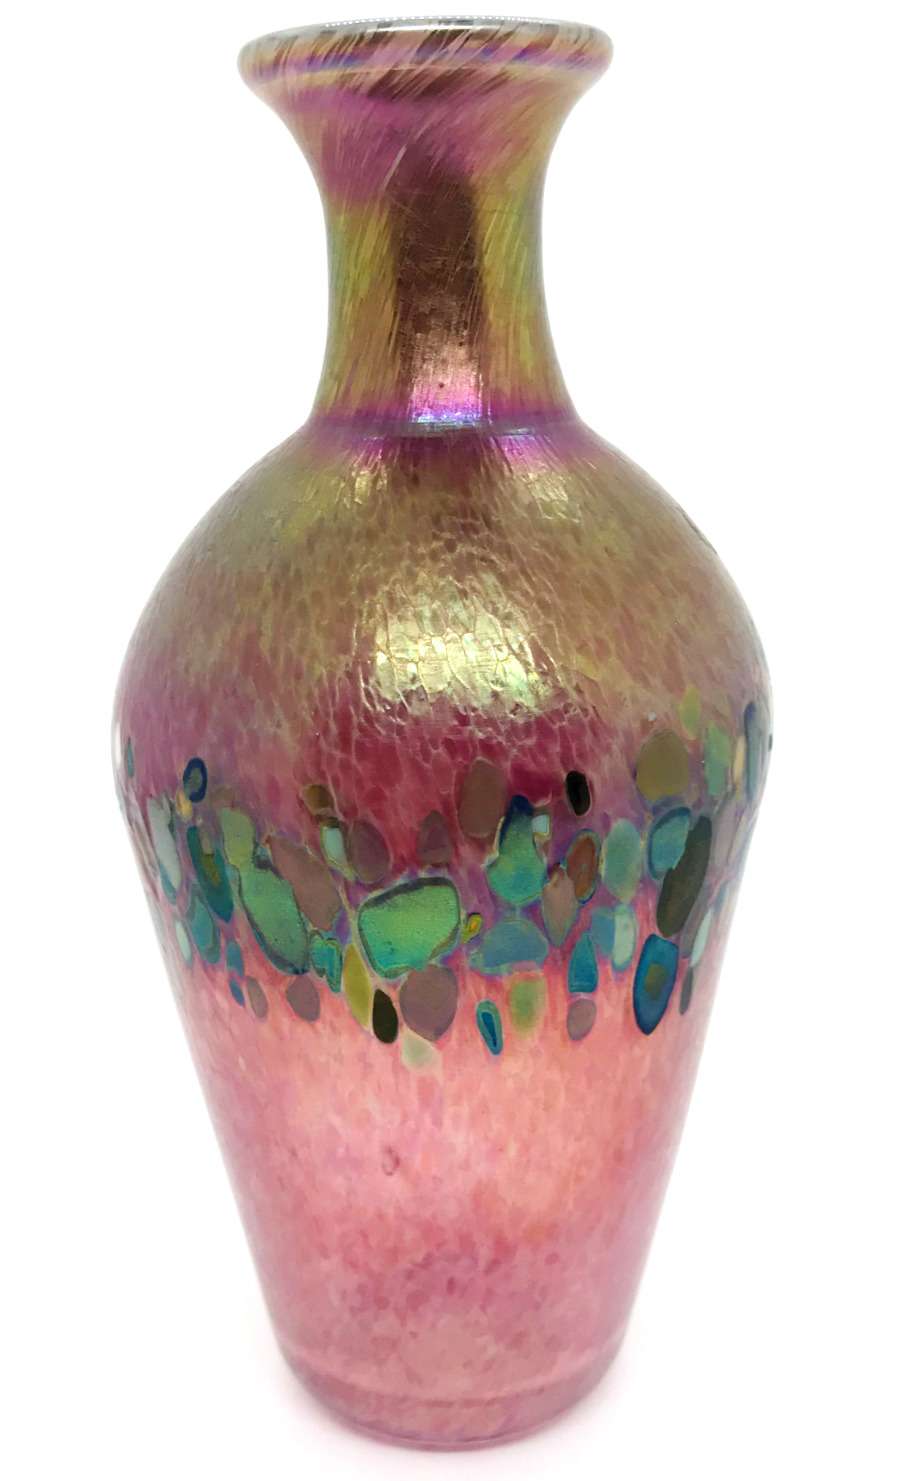 BEAUTIFUL Iridescent ART Glass VASE by James Norton Calgary Artist Signed MINT